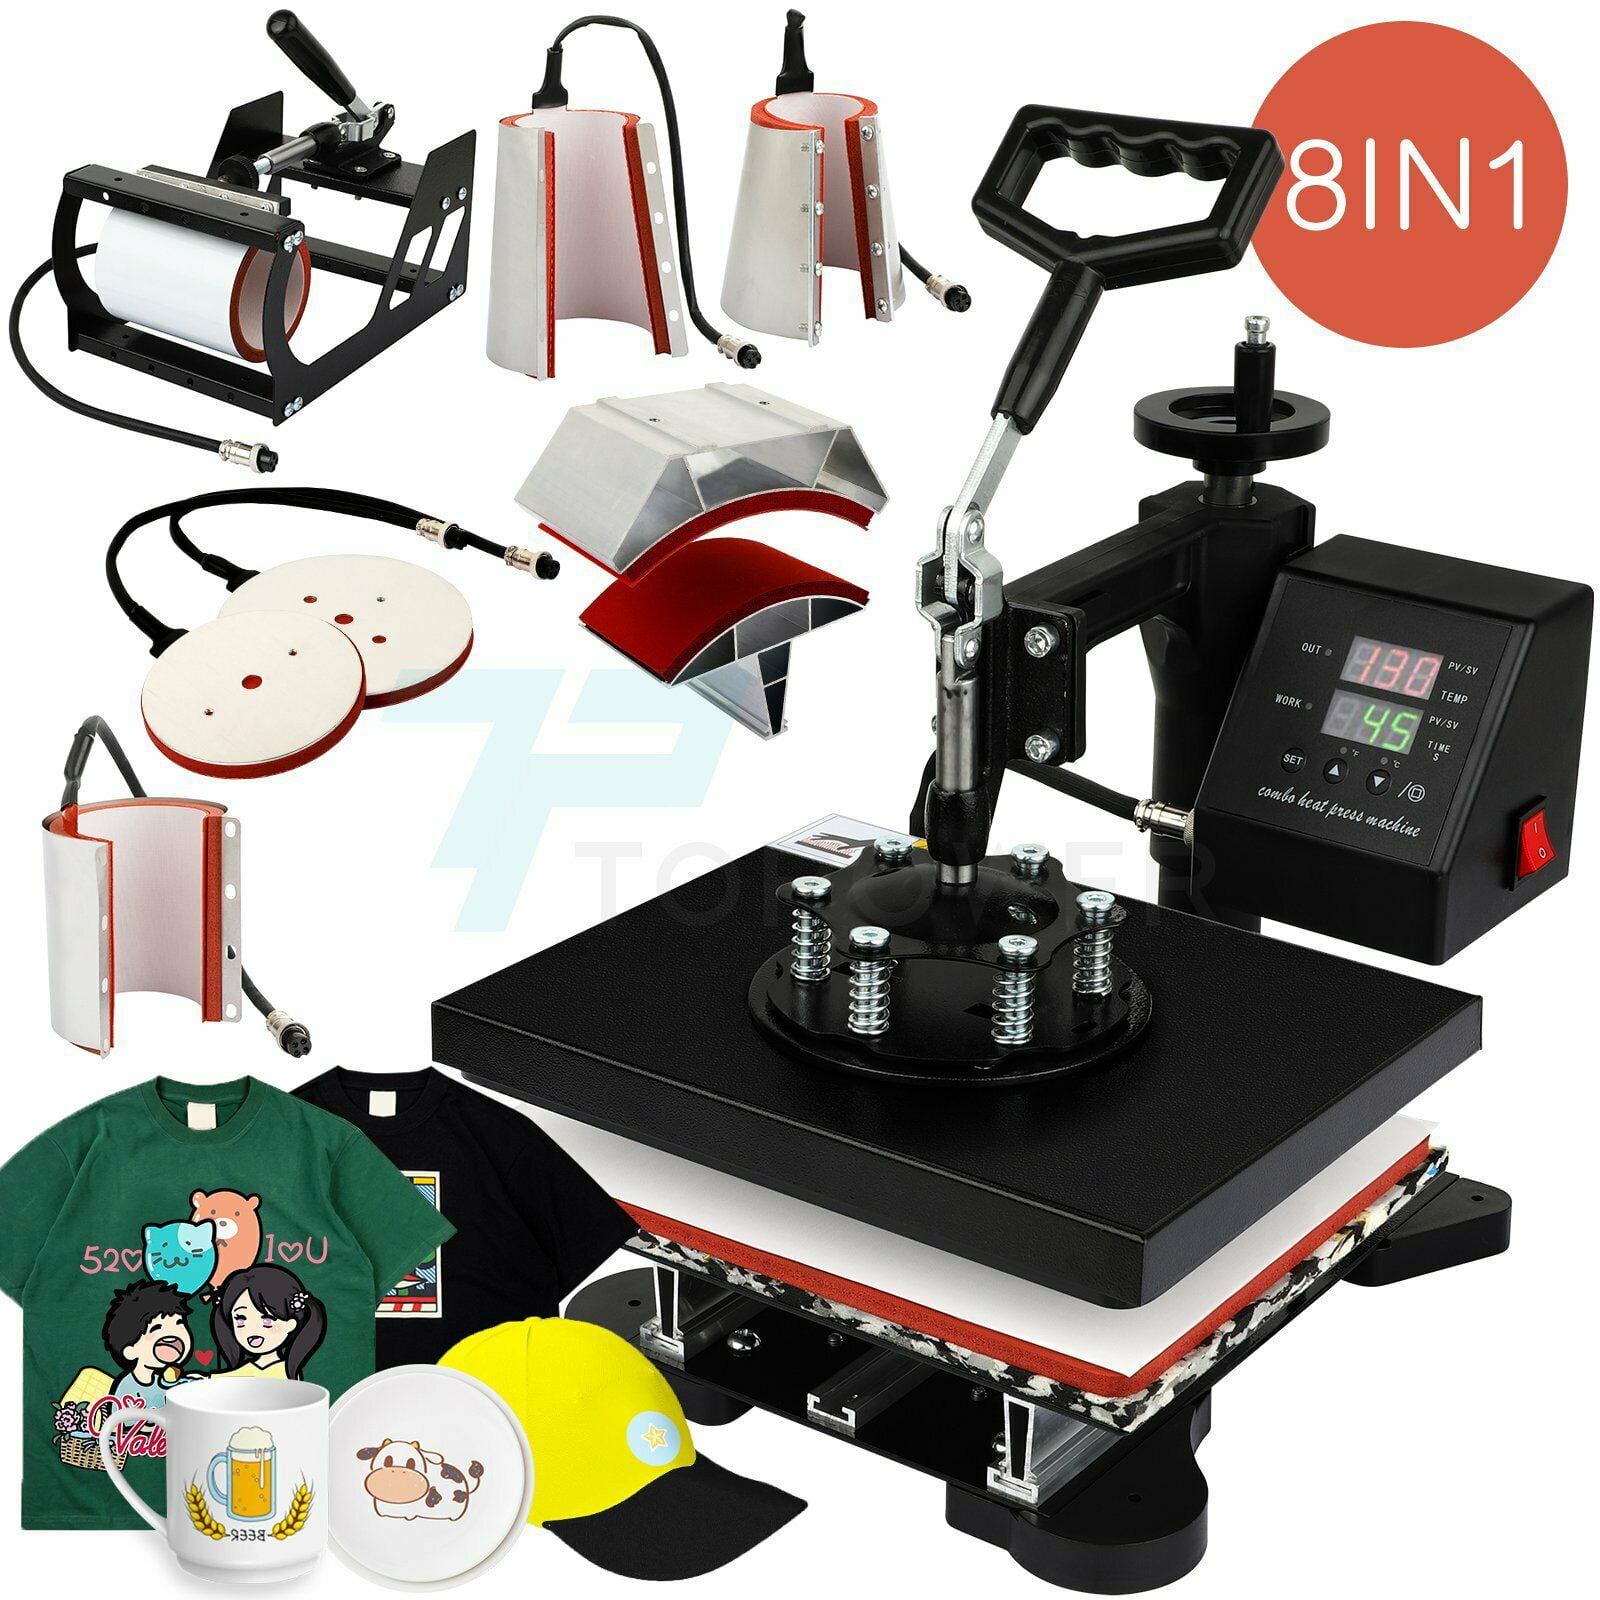 8in1 12"x10" Swing Away Digital Heat Press Machine Transfer Sublimation T-shirt 